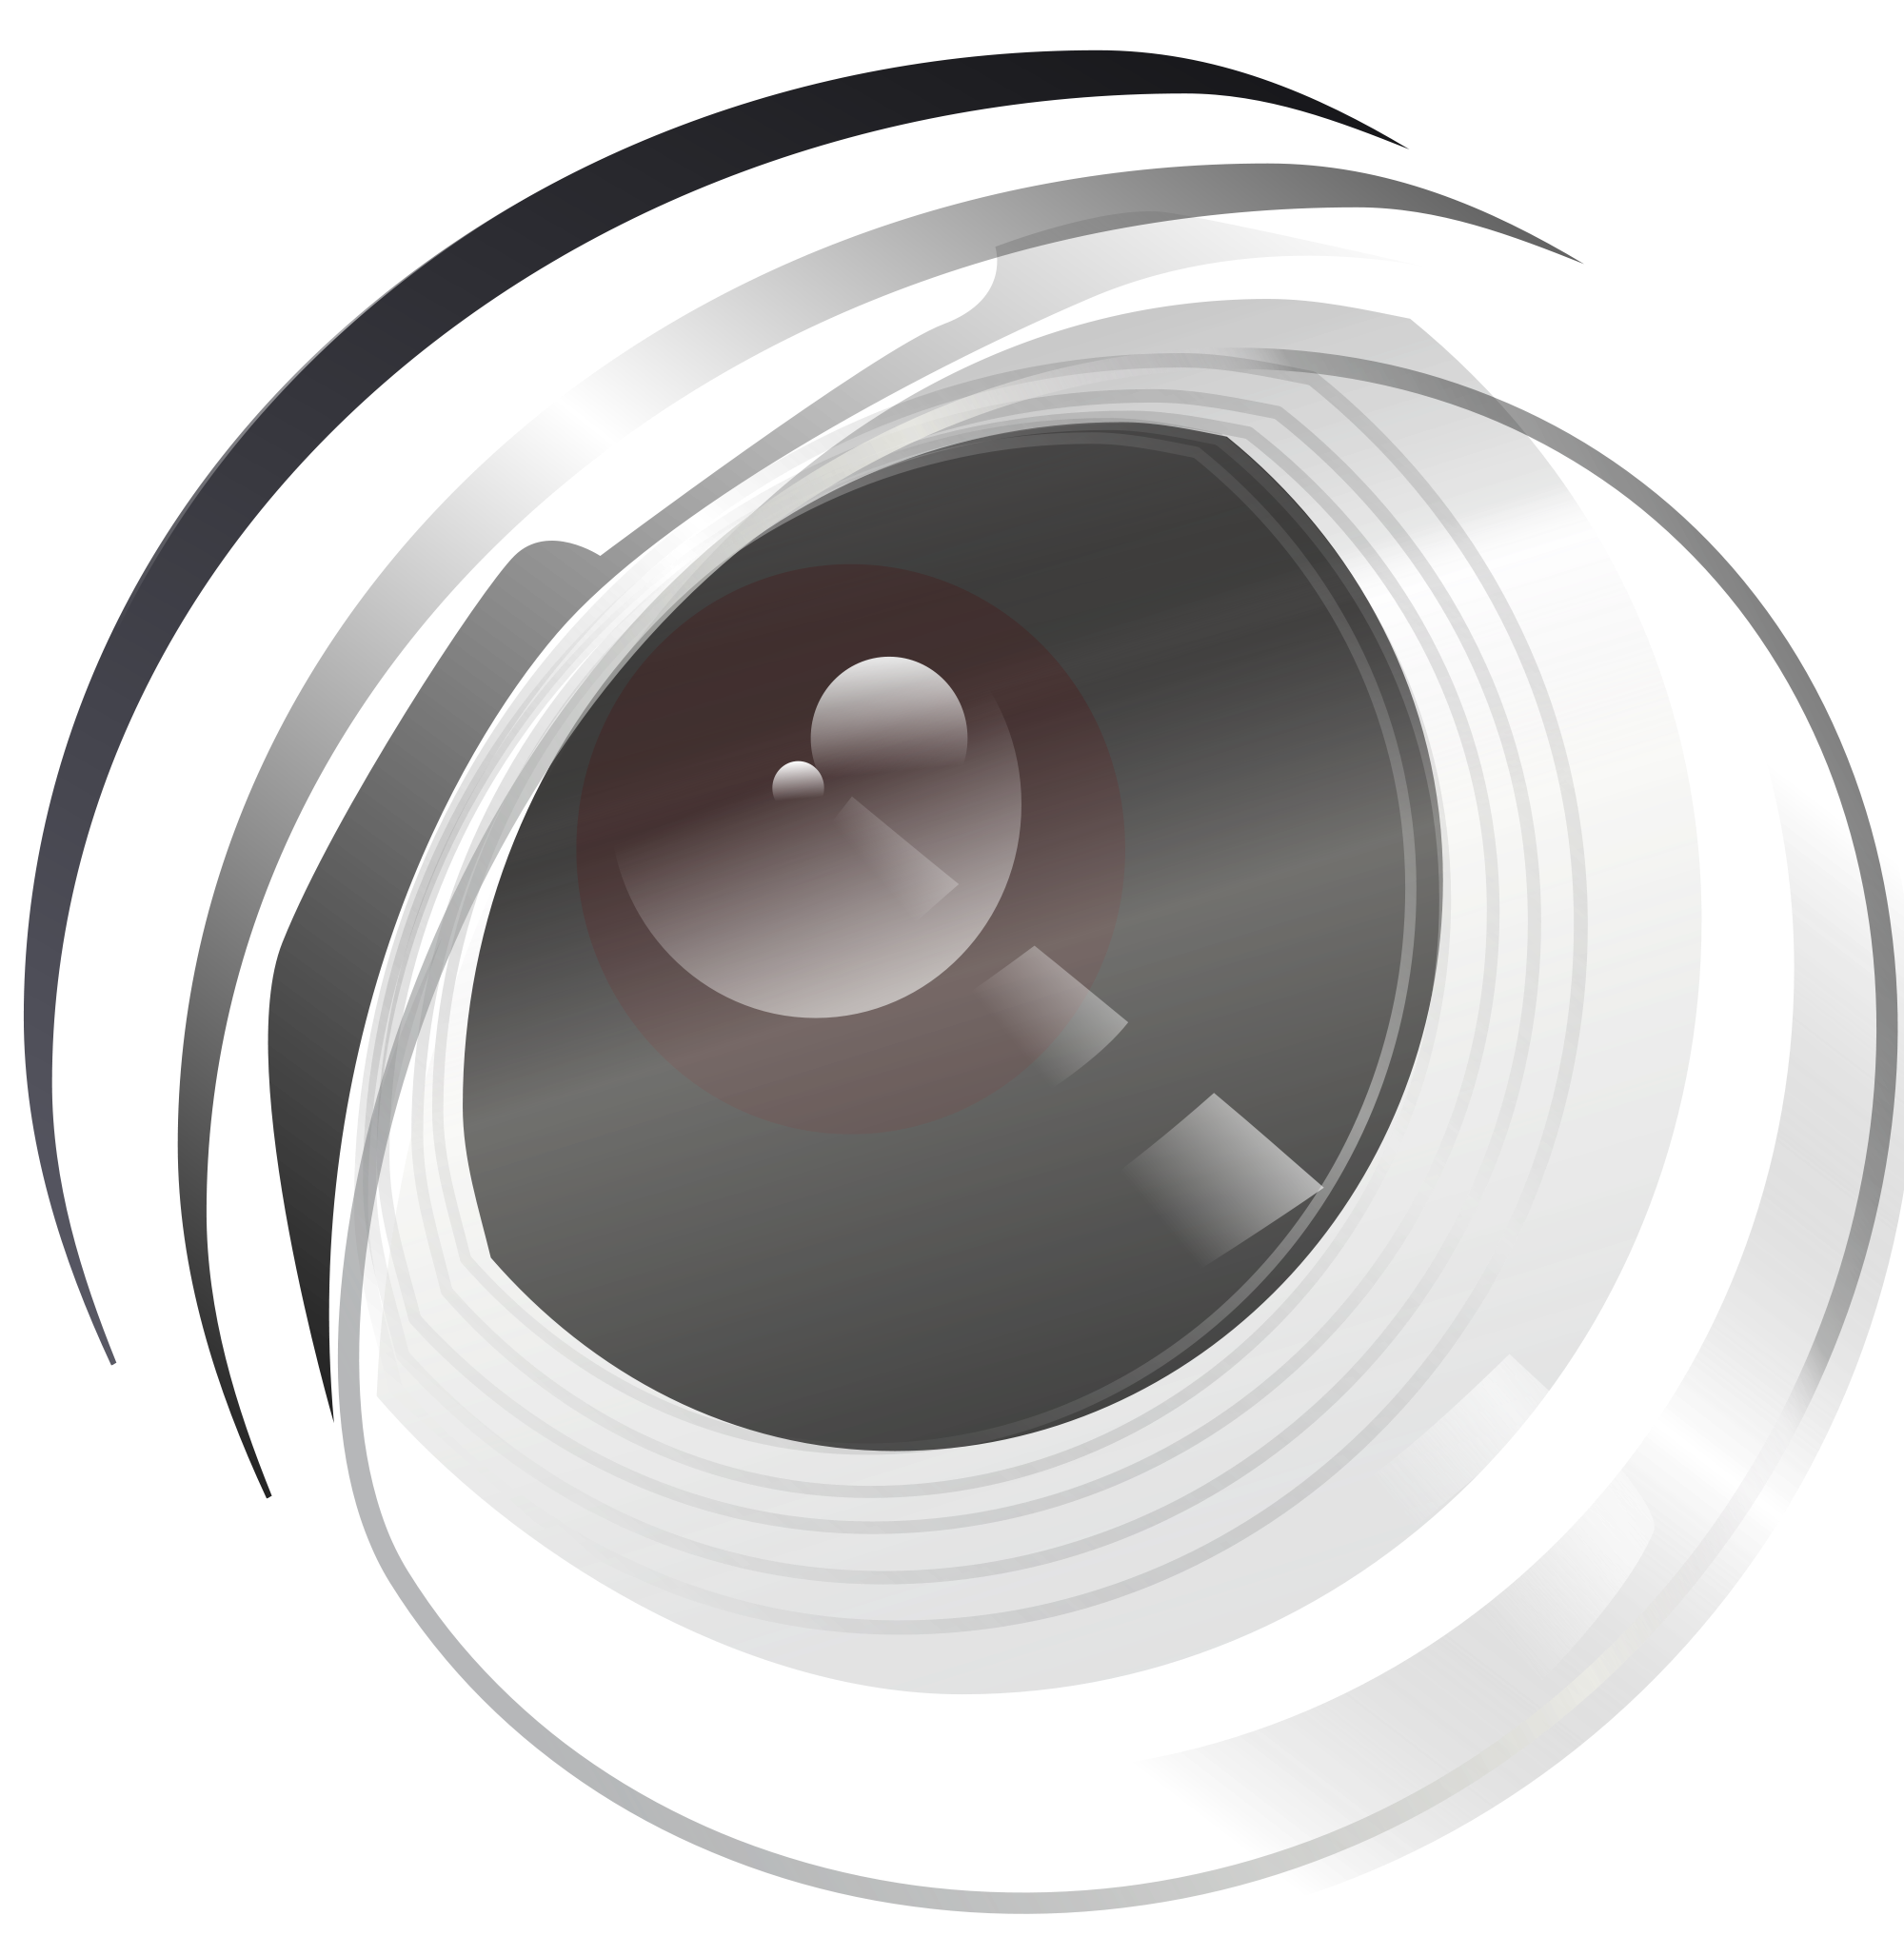 Free Camera Lens Logo Png, Download Free Clip Art, Free Clip.